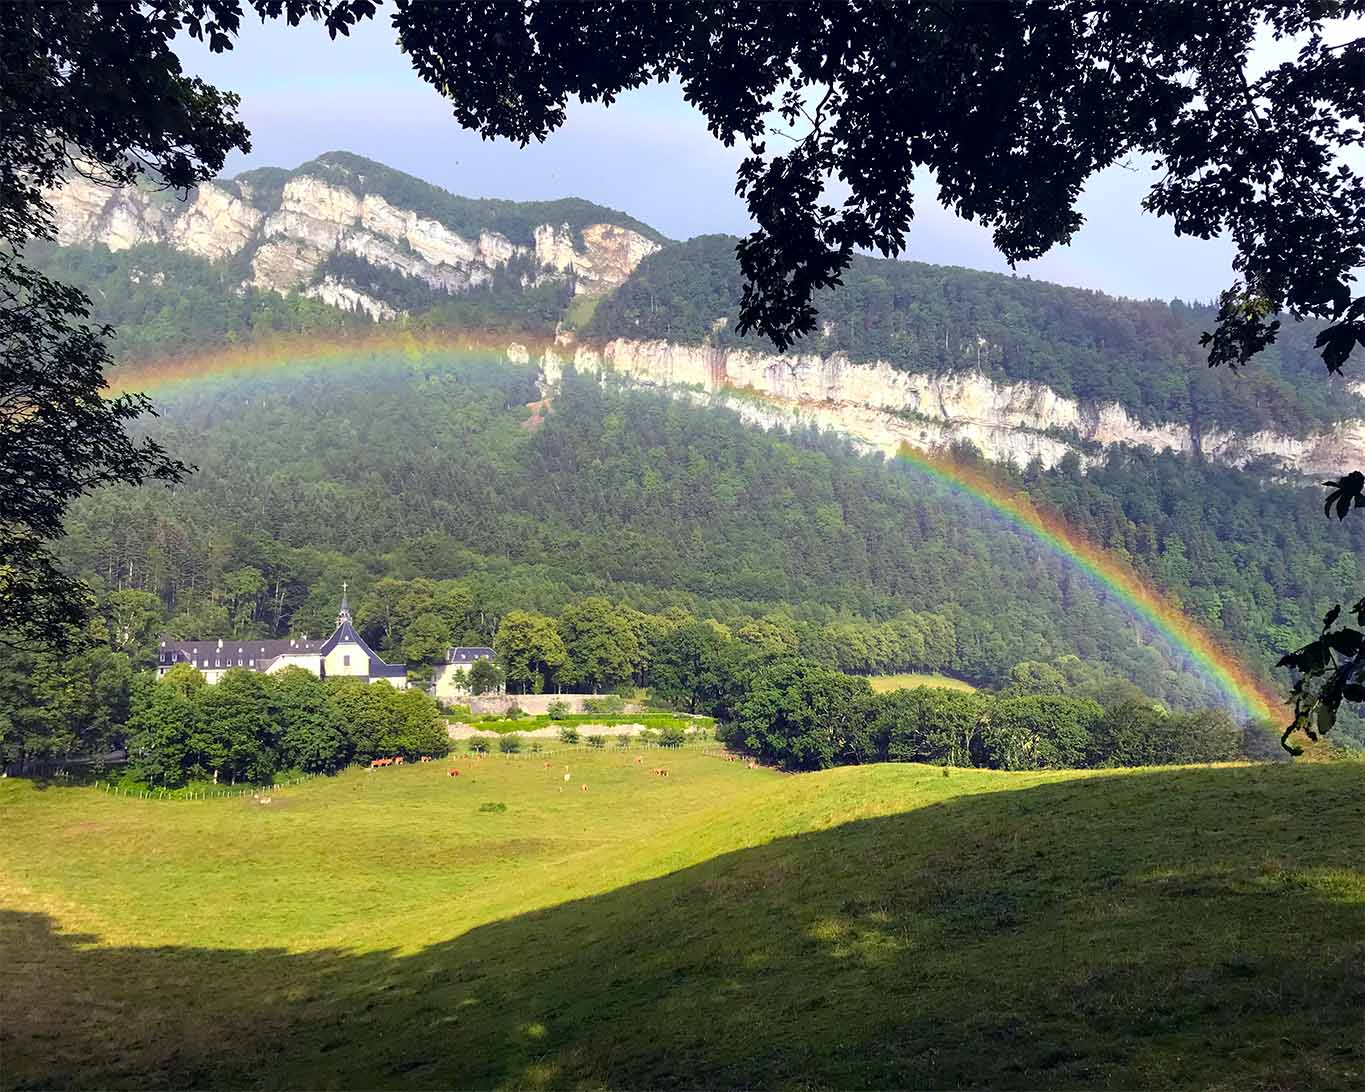 Postkartenromantik ist der Regenbogen über dem Kloster.